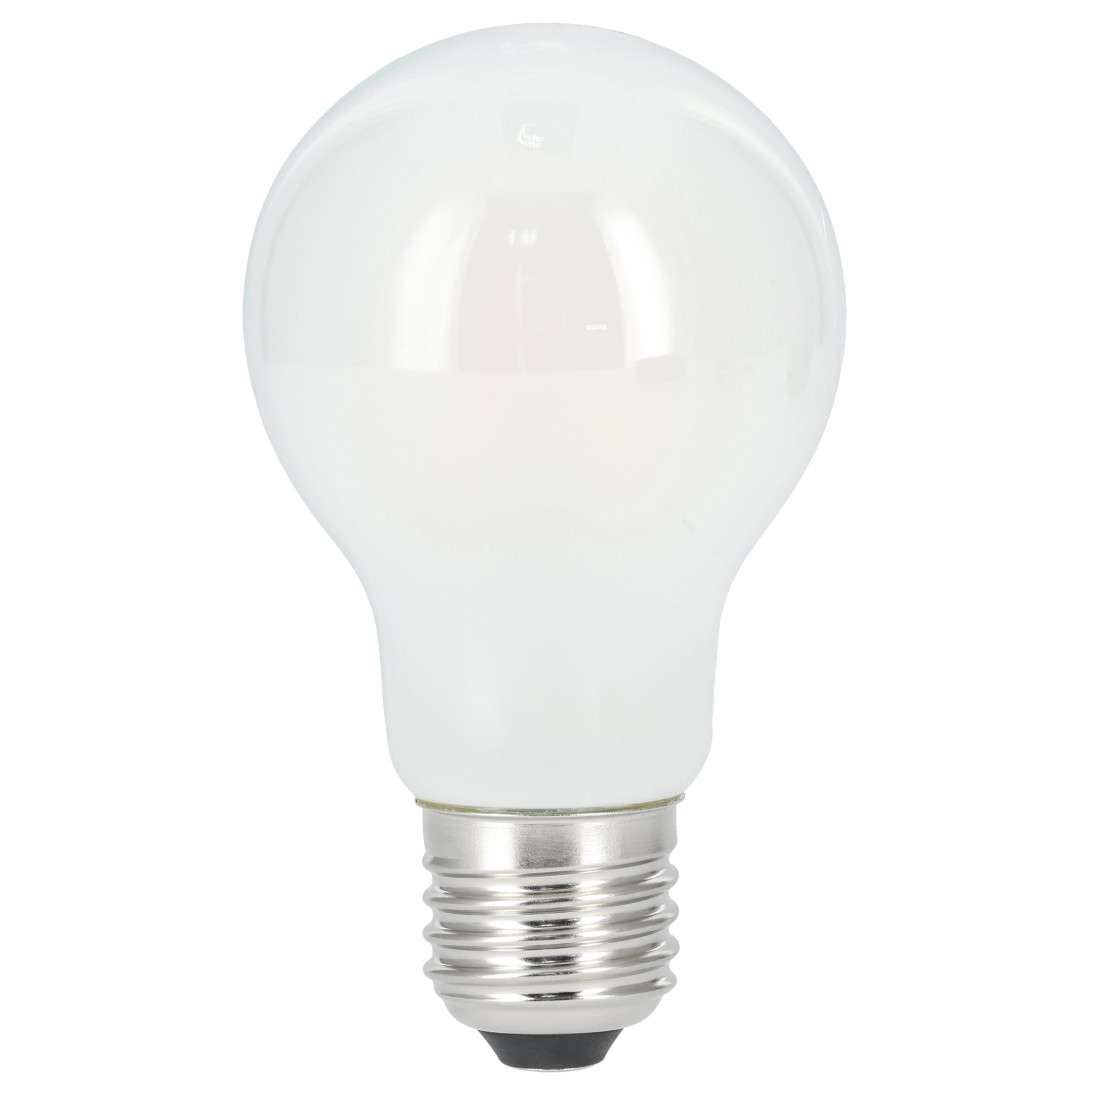 LED-Filament, E27, 1521lm ersetzt 100W, Glühlampe, Warmweiß, dimmbar, matt